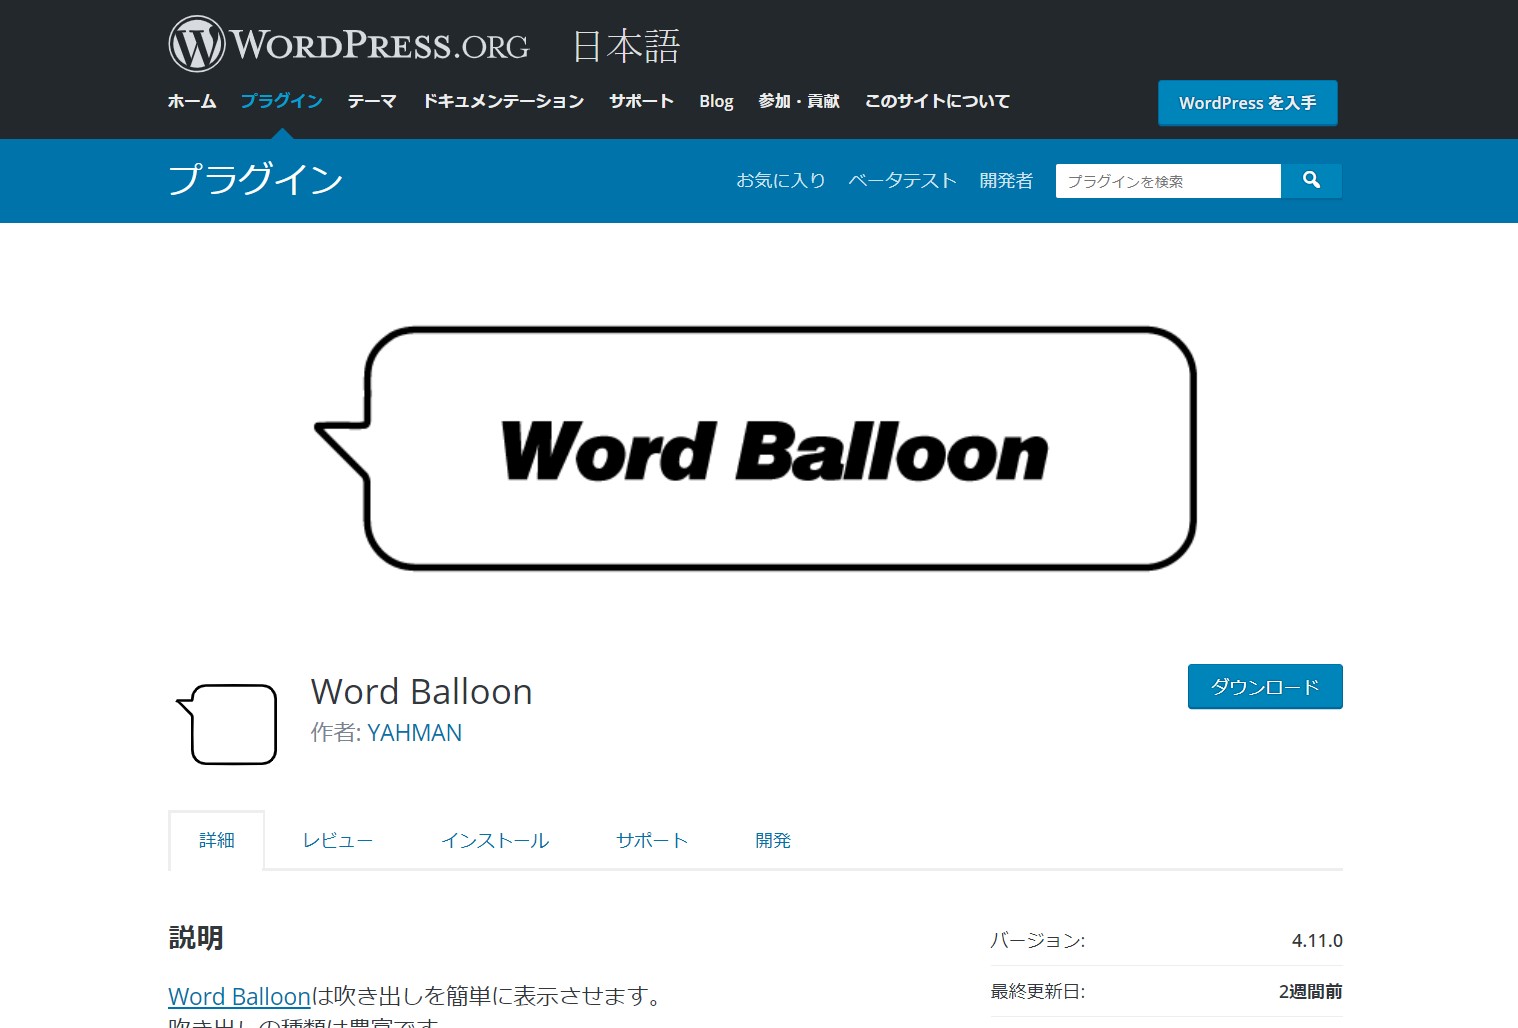 WordBalloon